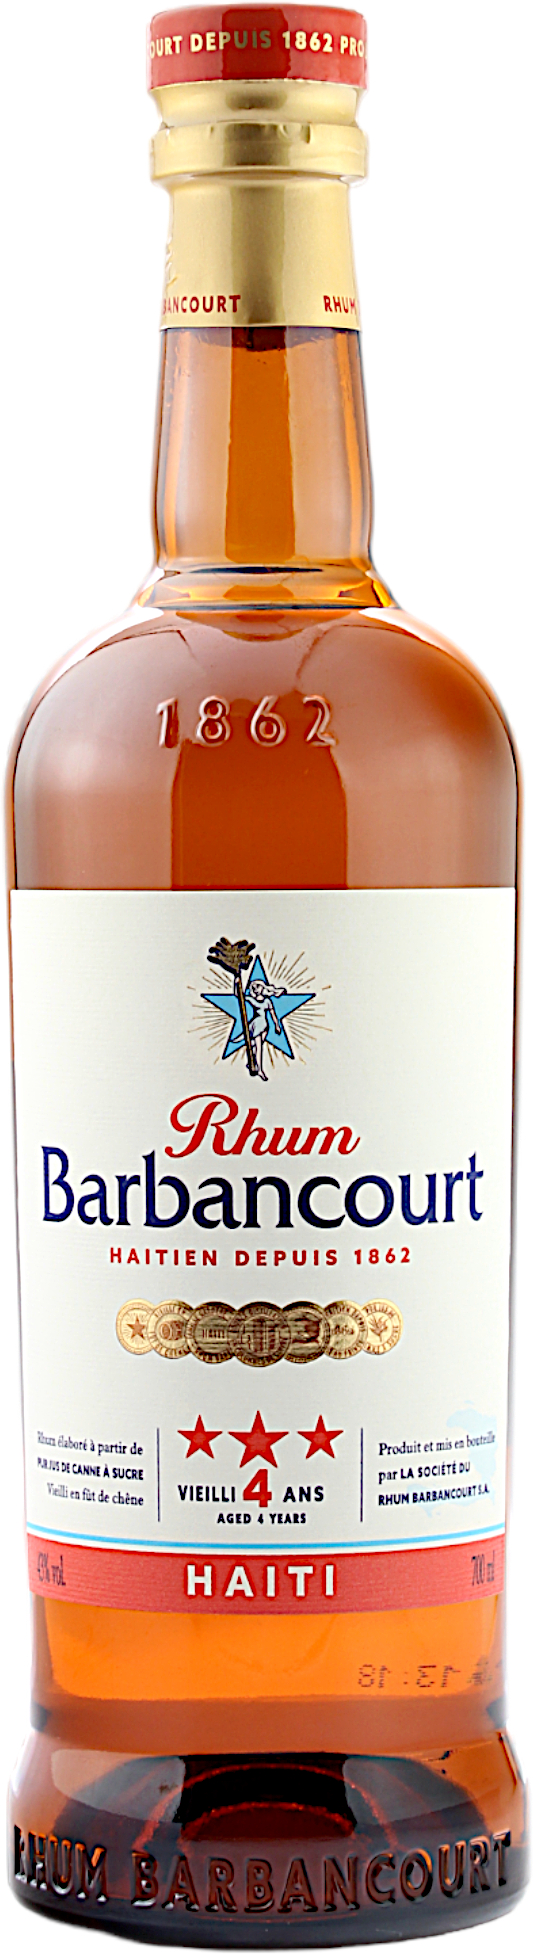 Barbancourt Rhum Three Stars 4 Jahre 43.0% 0,7l